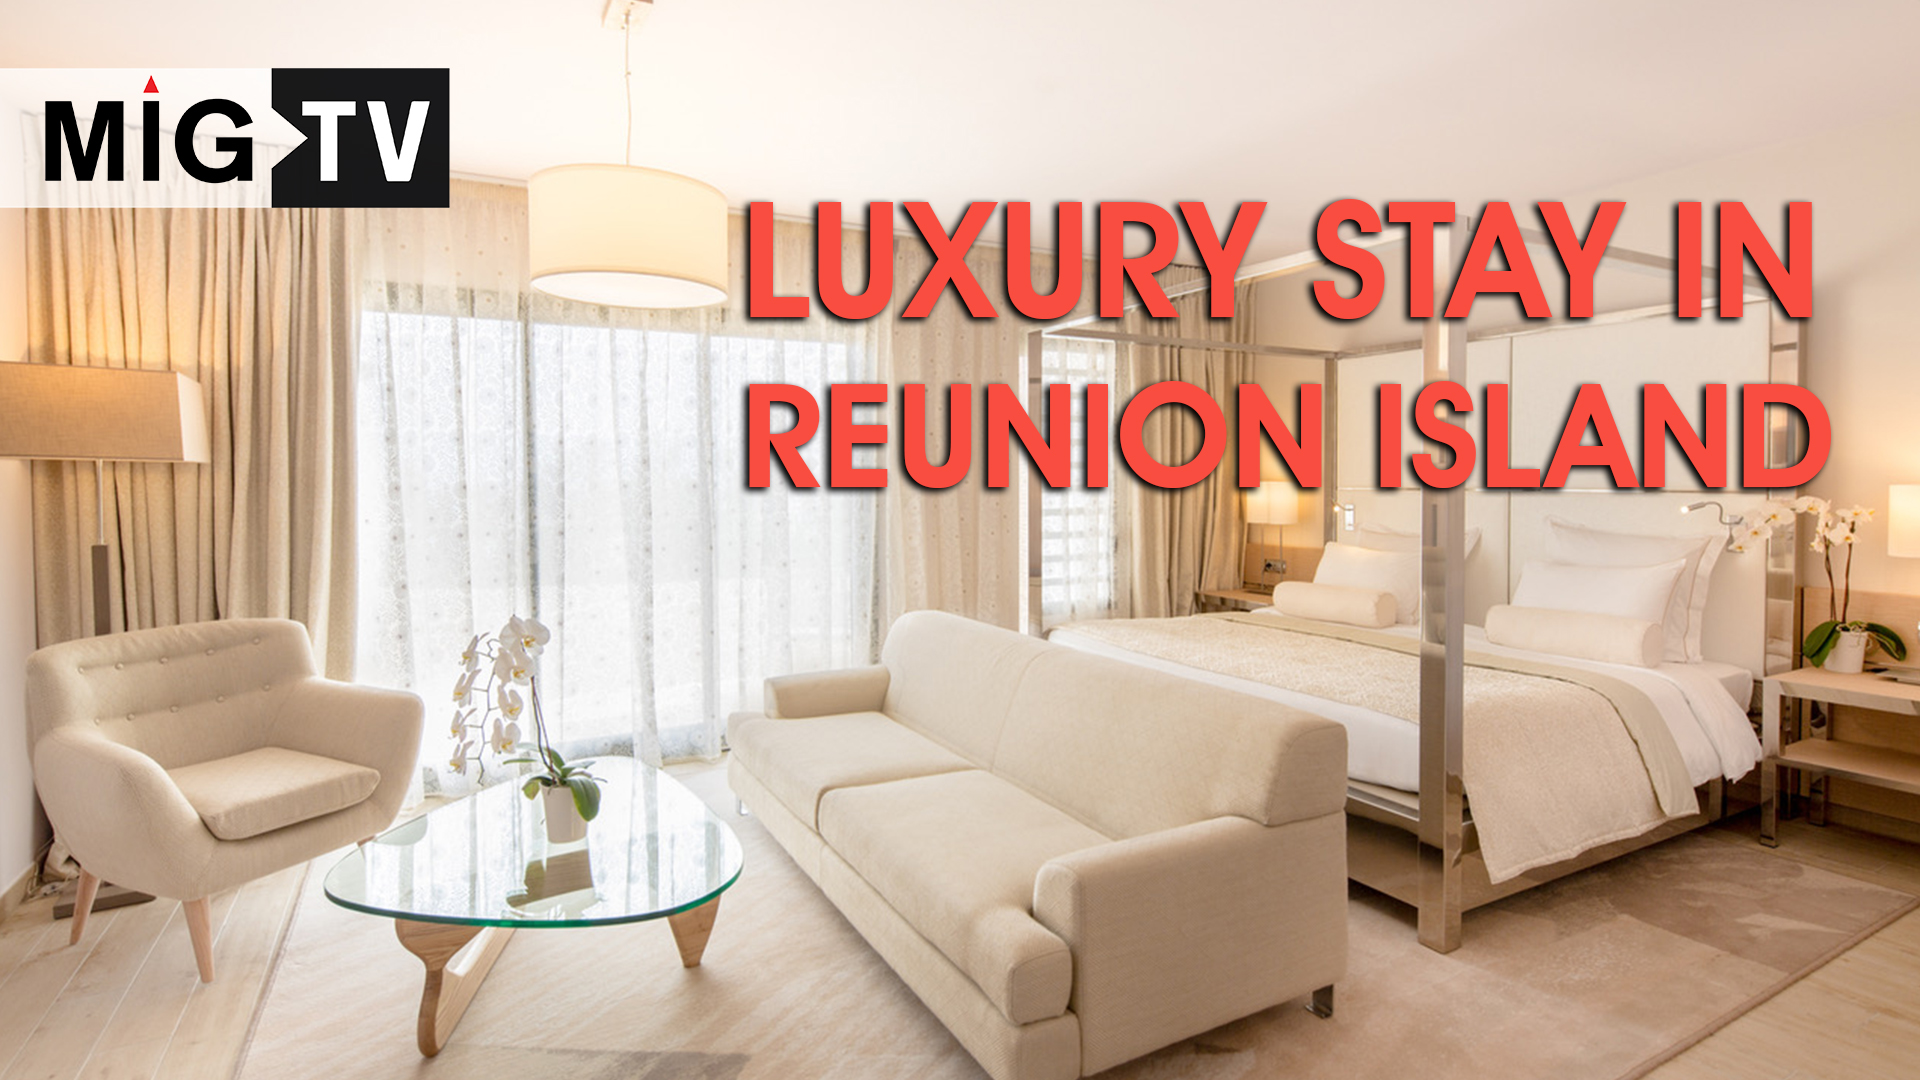 Luxury stay in Reunion Island